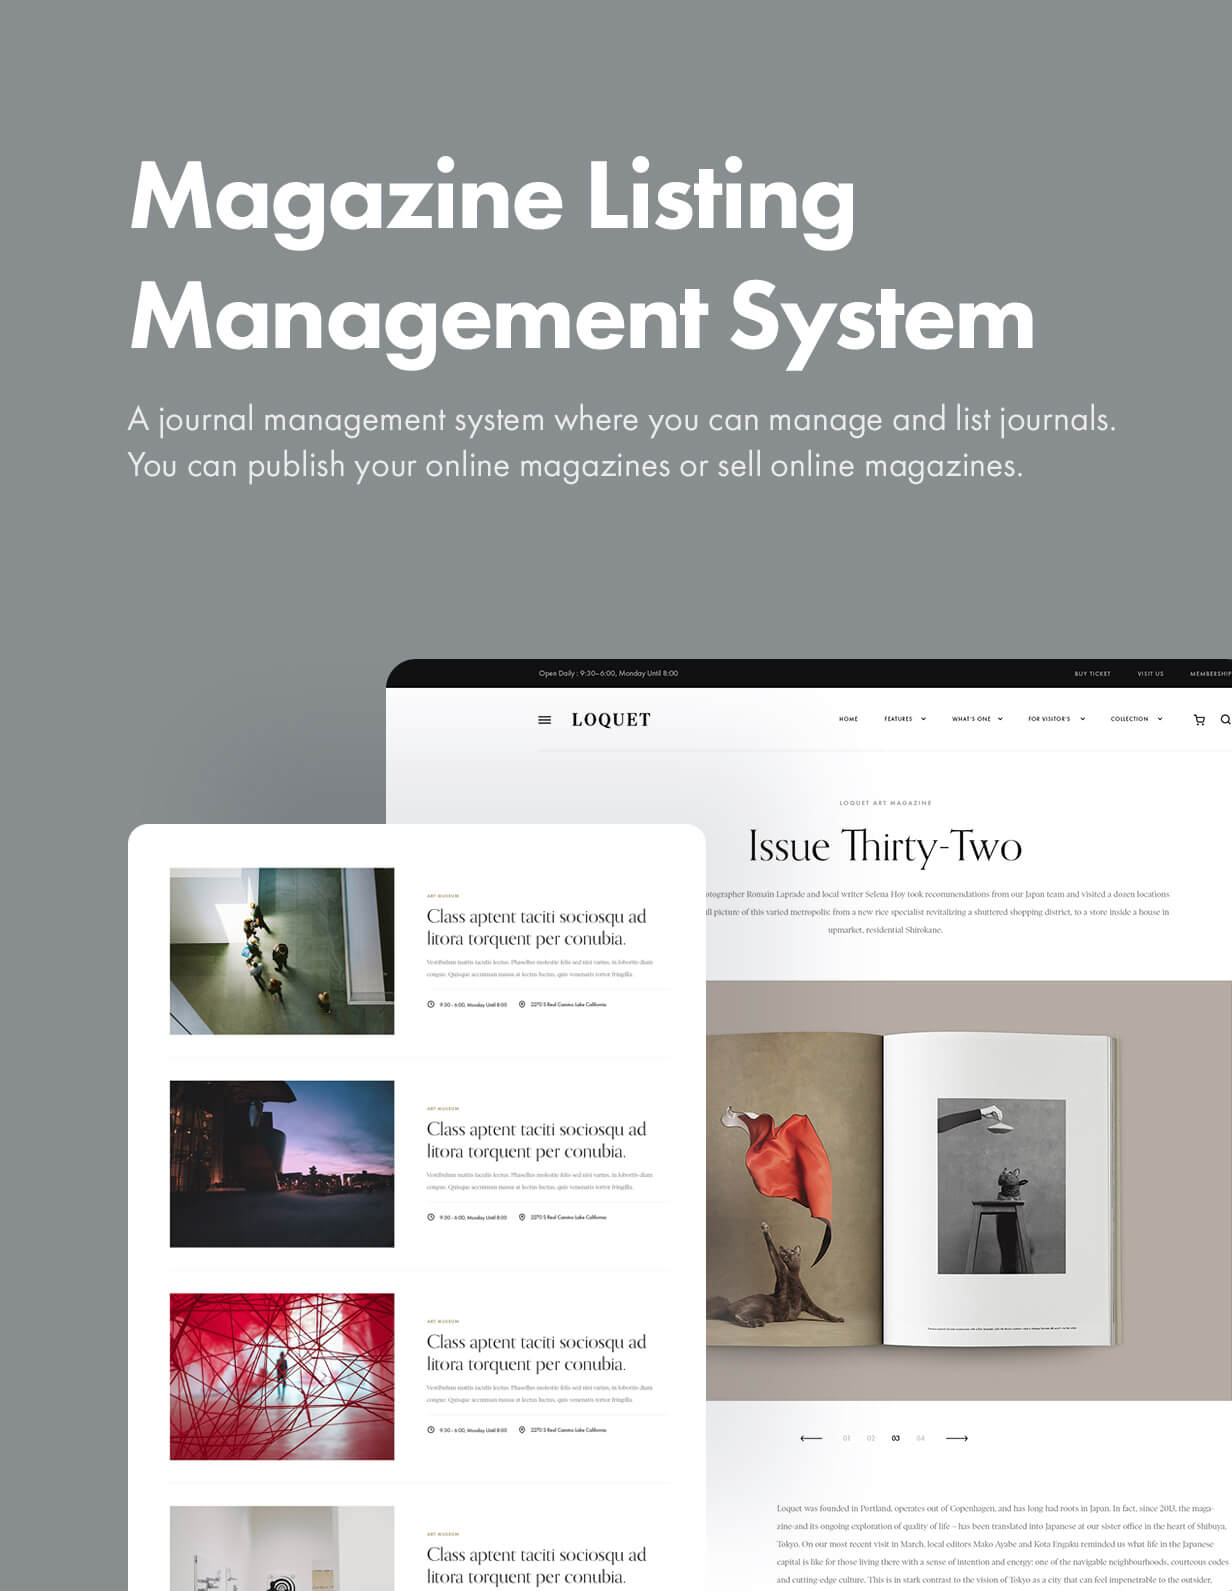 Magazine listing management system